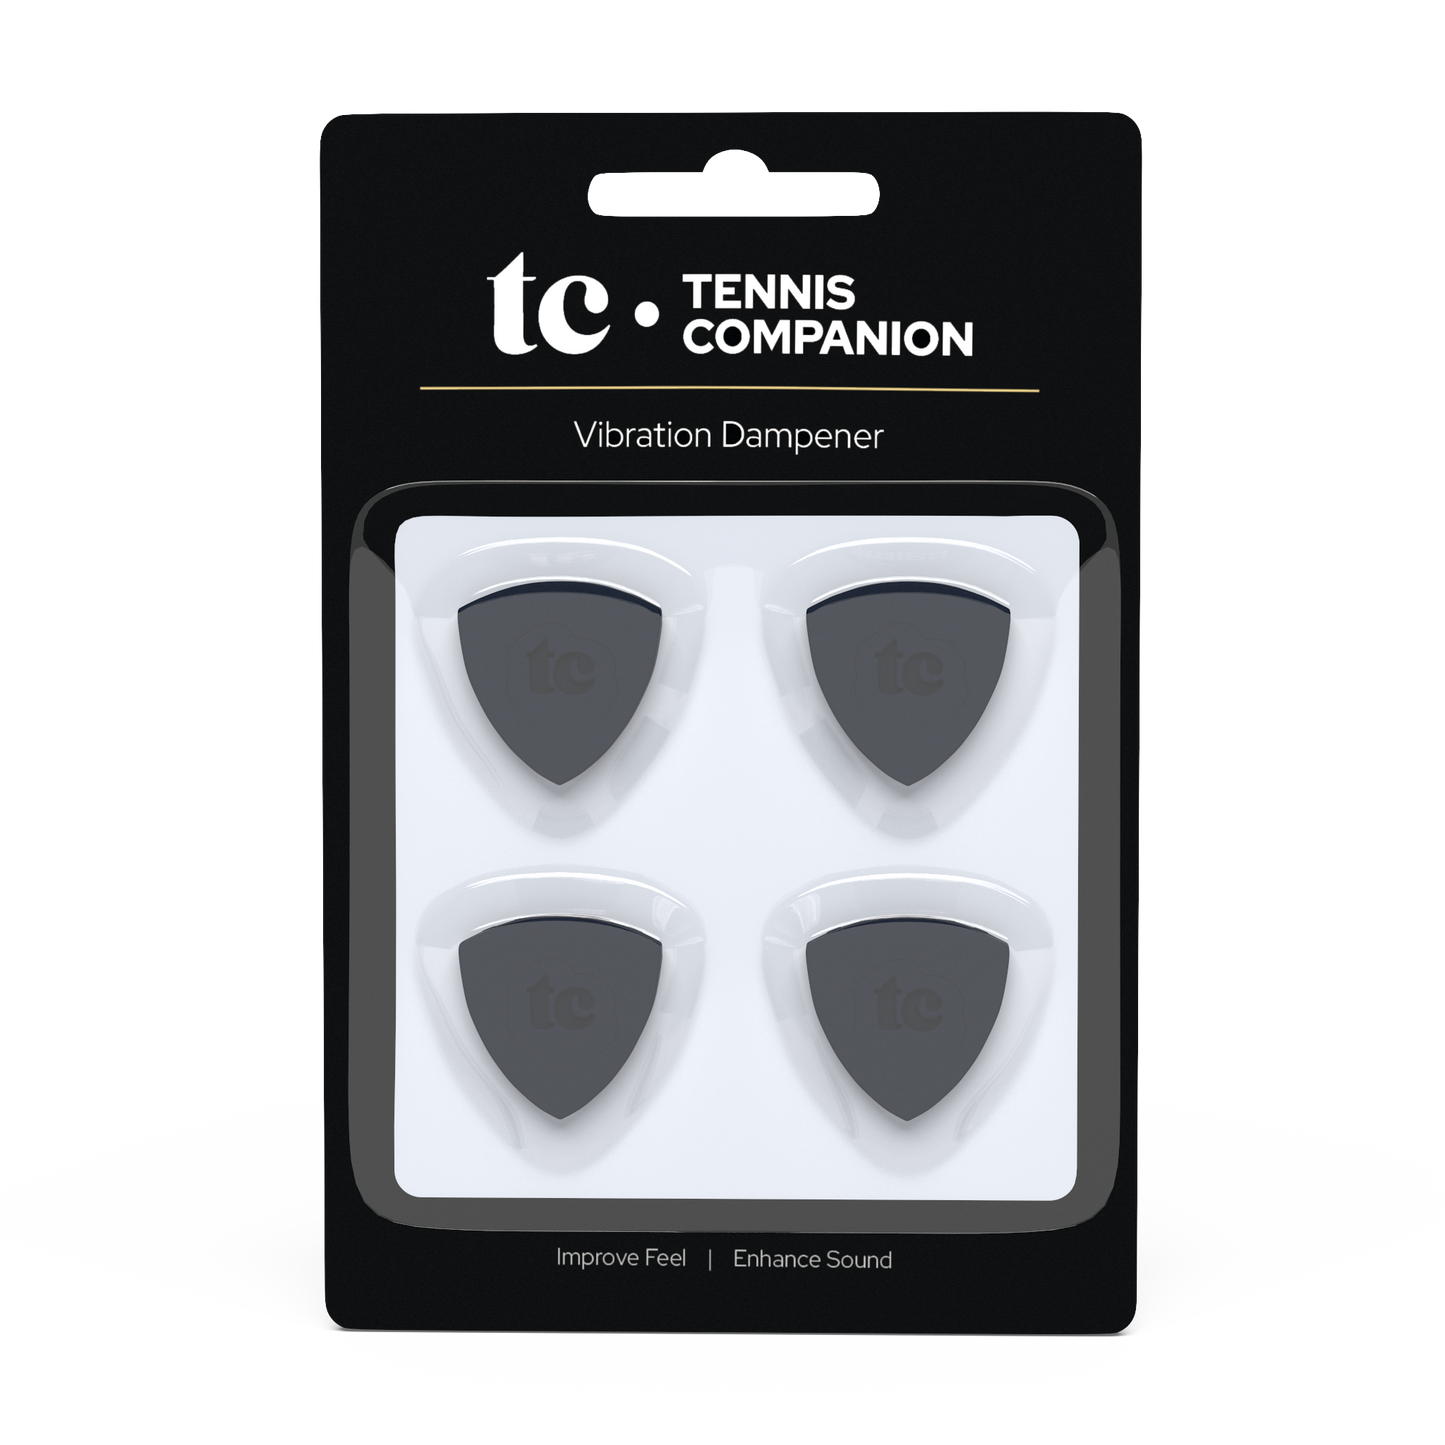 TennisCompanion Vibration Dampener Package Front